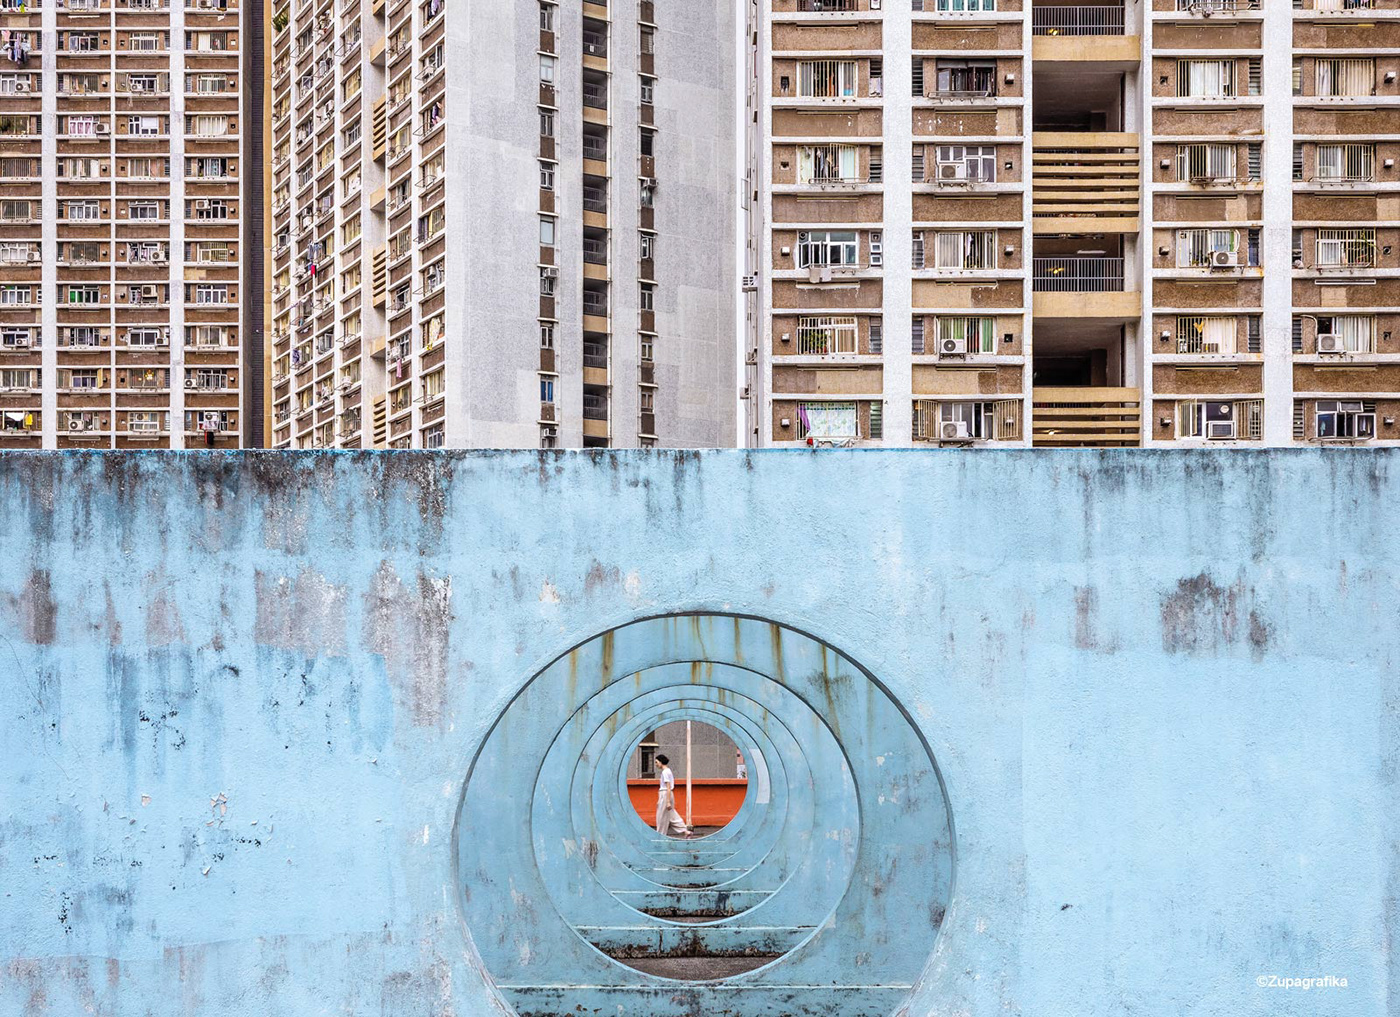 Hong Kong public housing modernism architecture